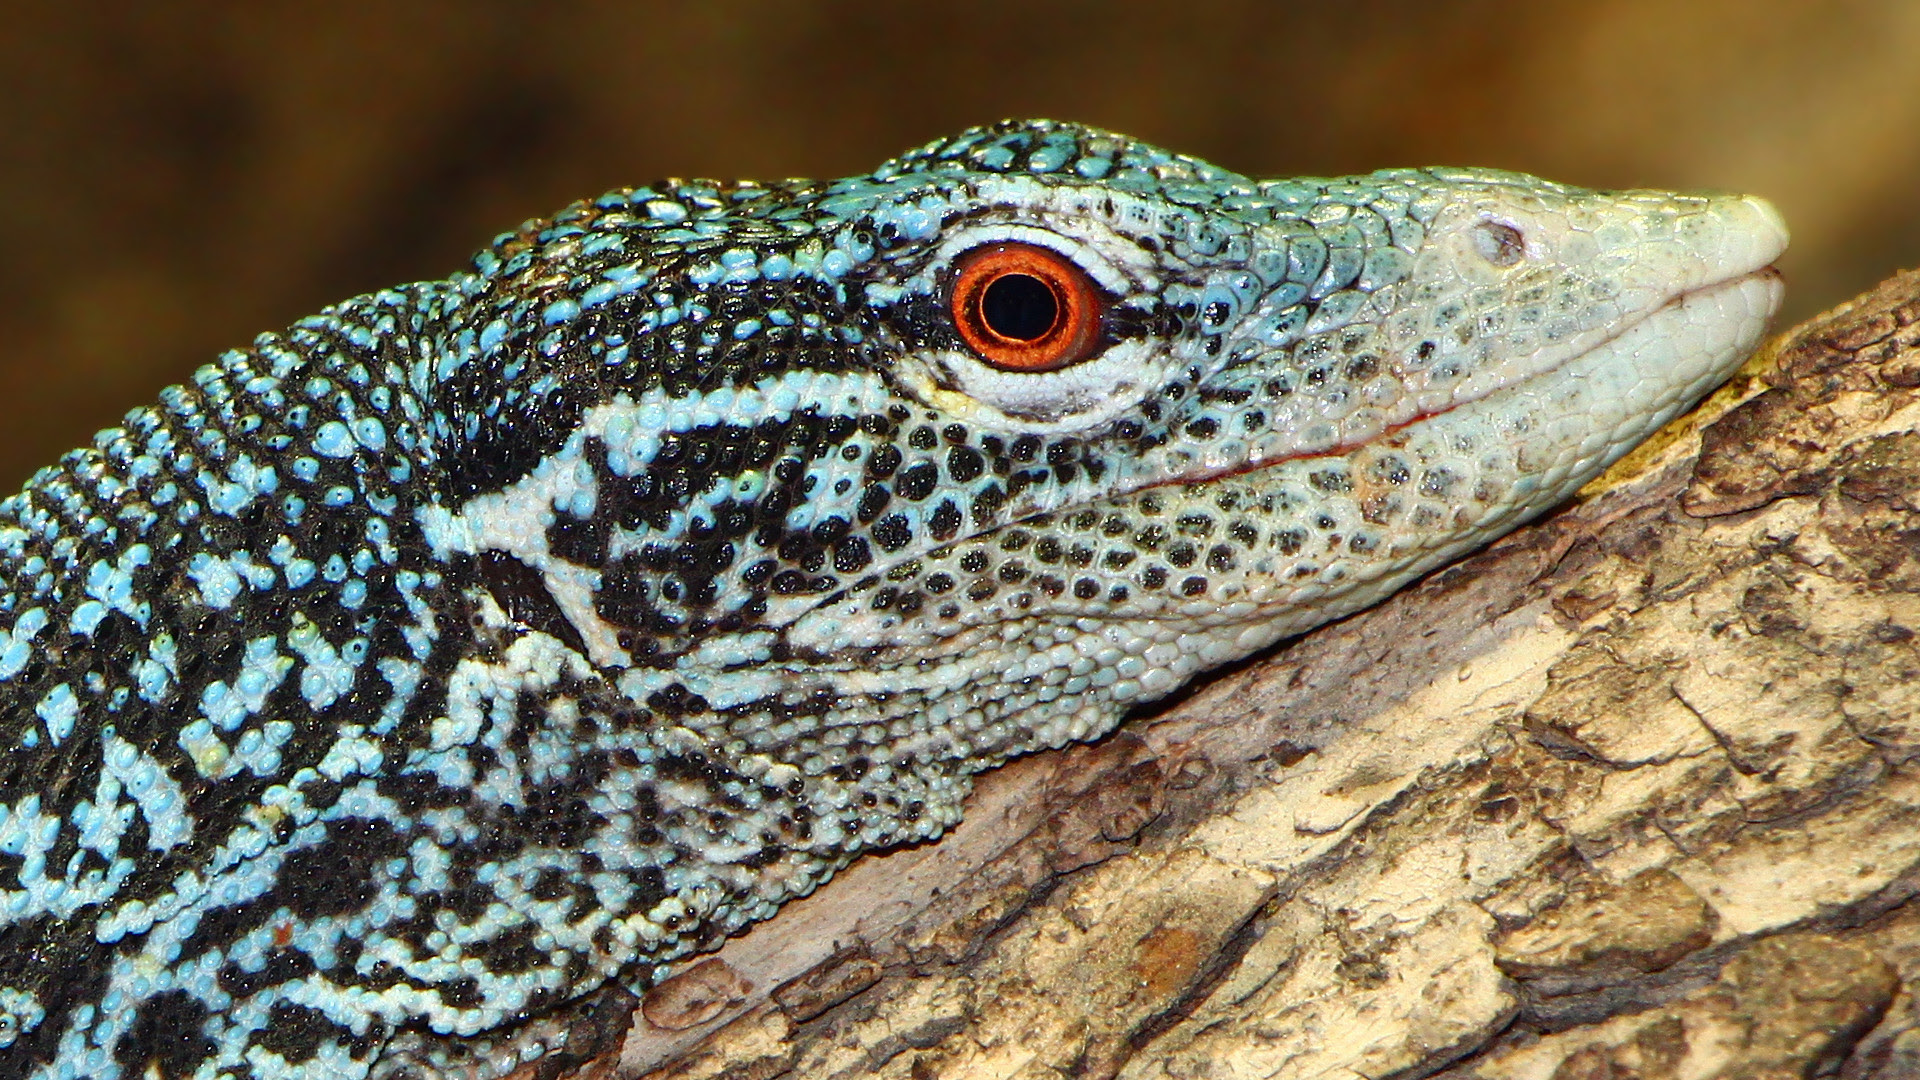 Blue tree monitor lizard